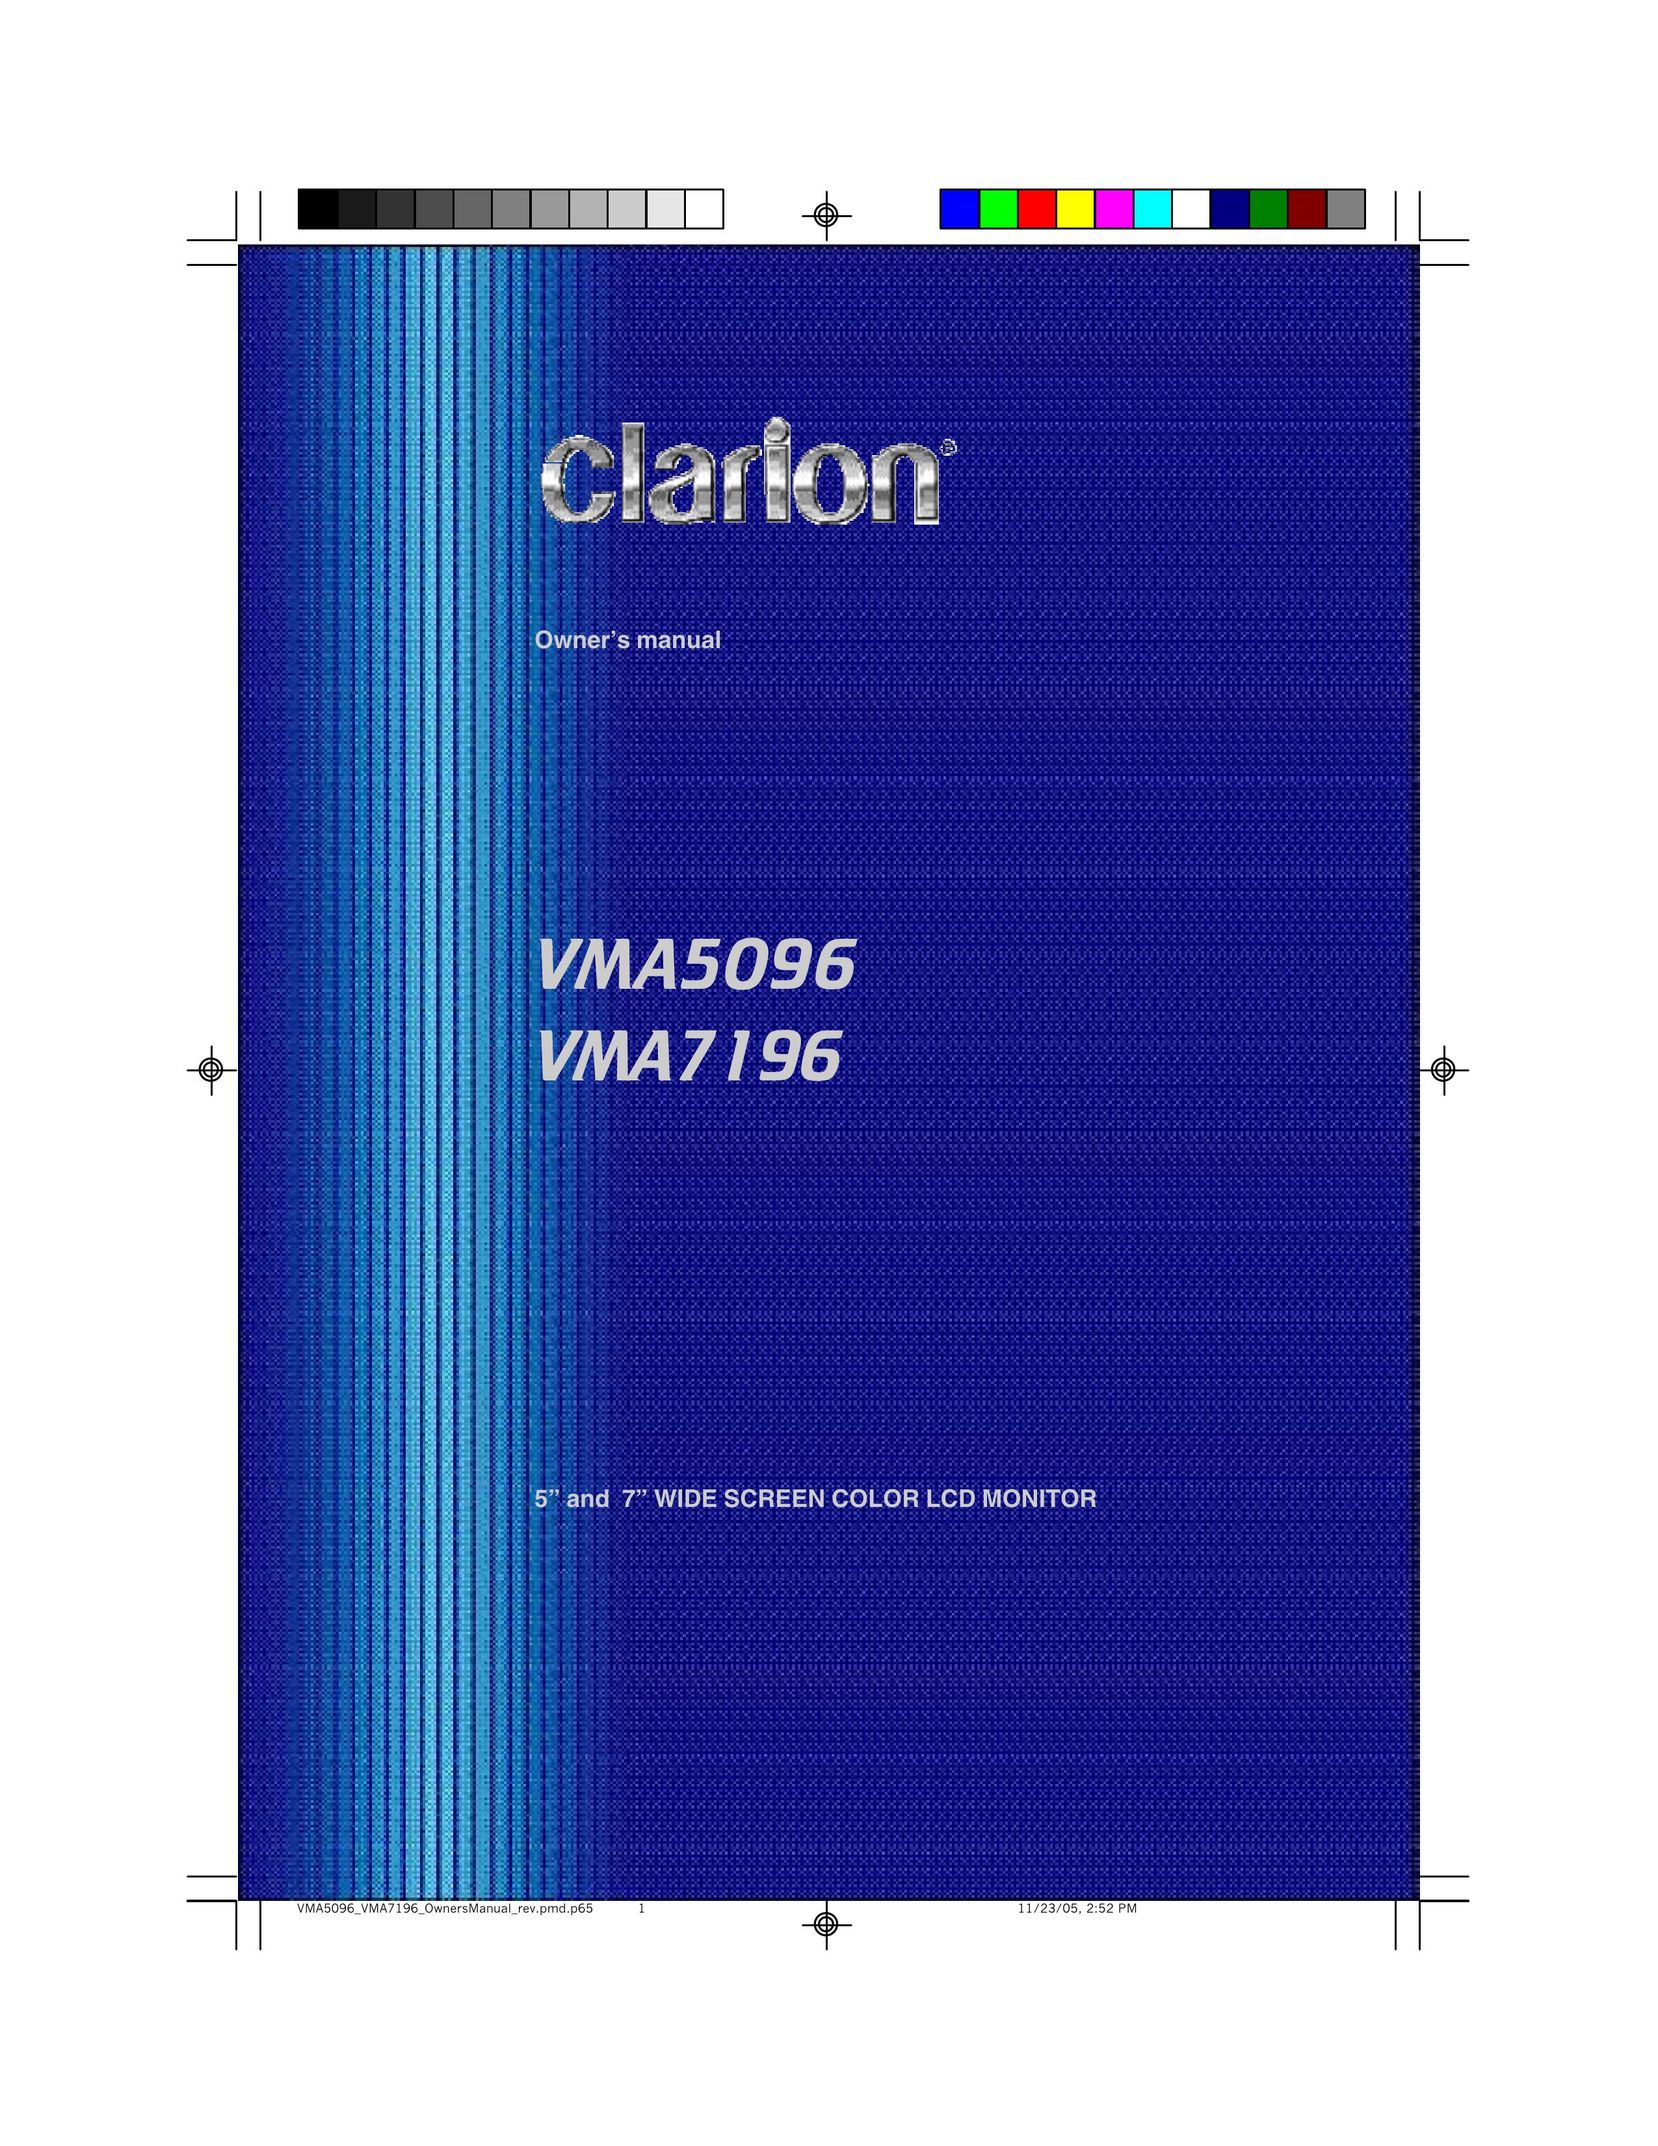 Clarion VMA5096 Flat Panel Television User Manual